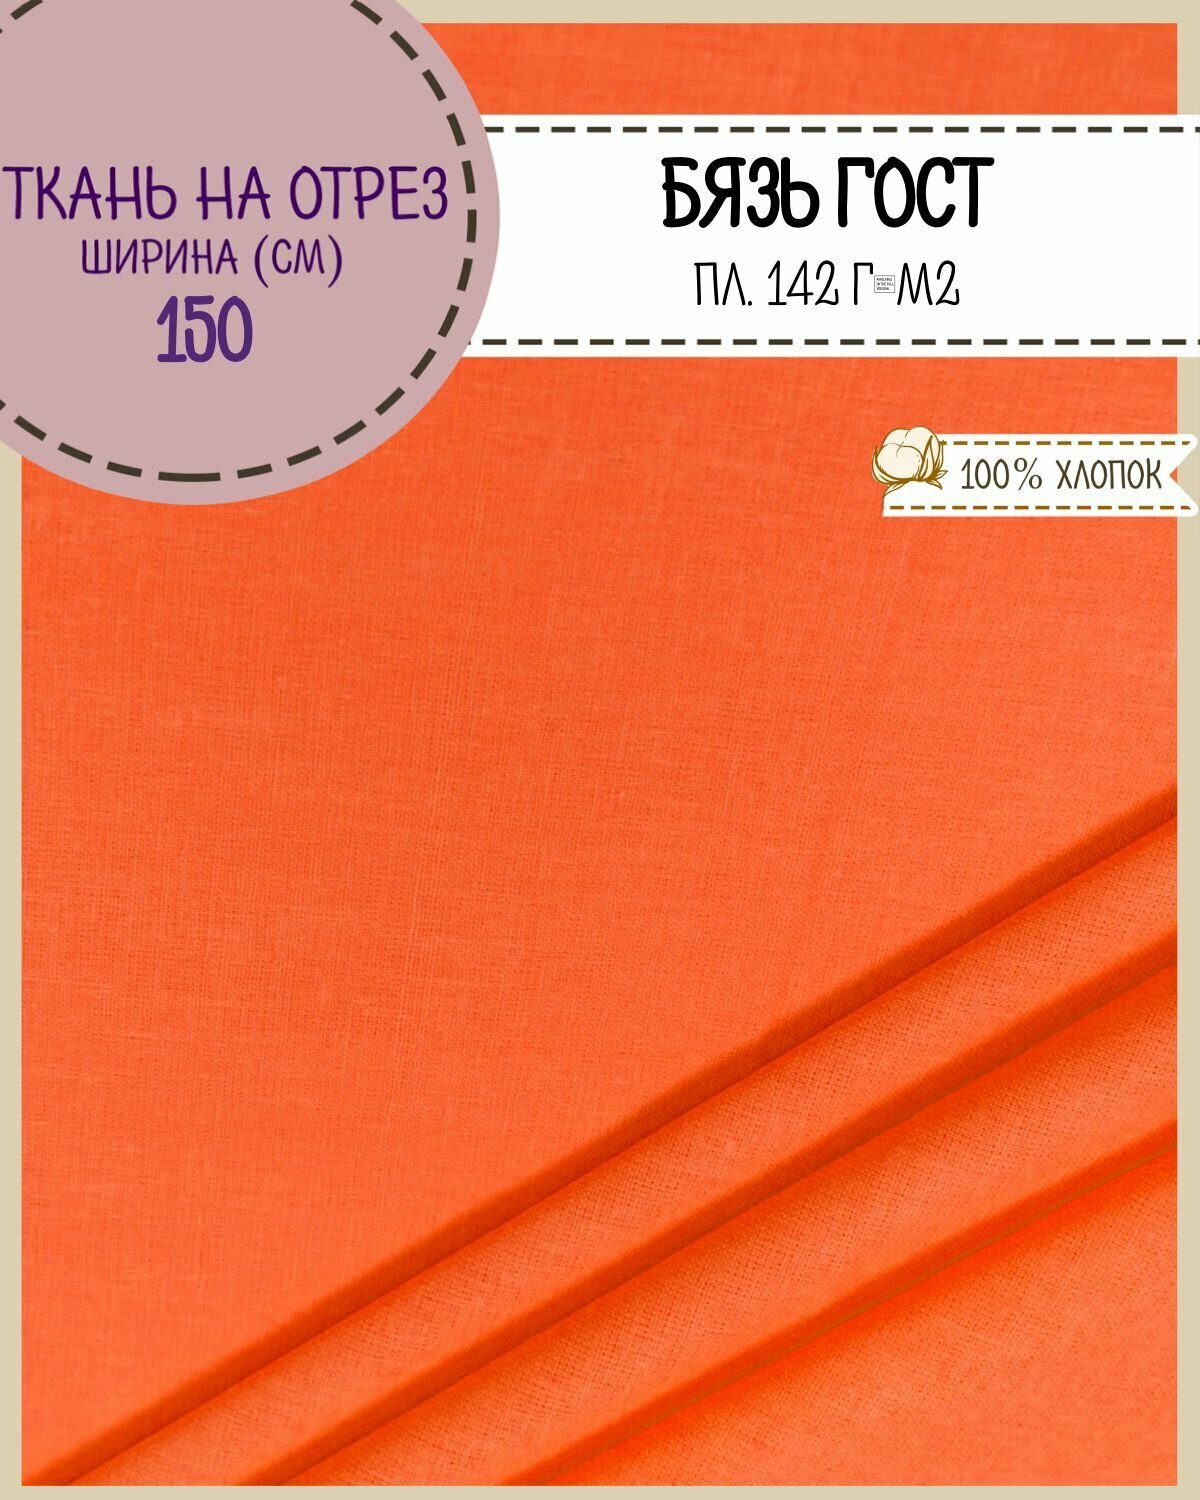 Ткань Бязь ГОСТ однотонная, цв. оранжевый, 100% хлопок, пл. 140 г/м2, ш-150 см, на отрез, цена за пог. метр